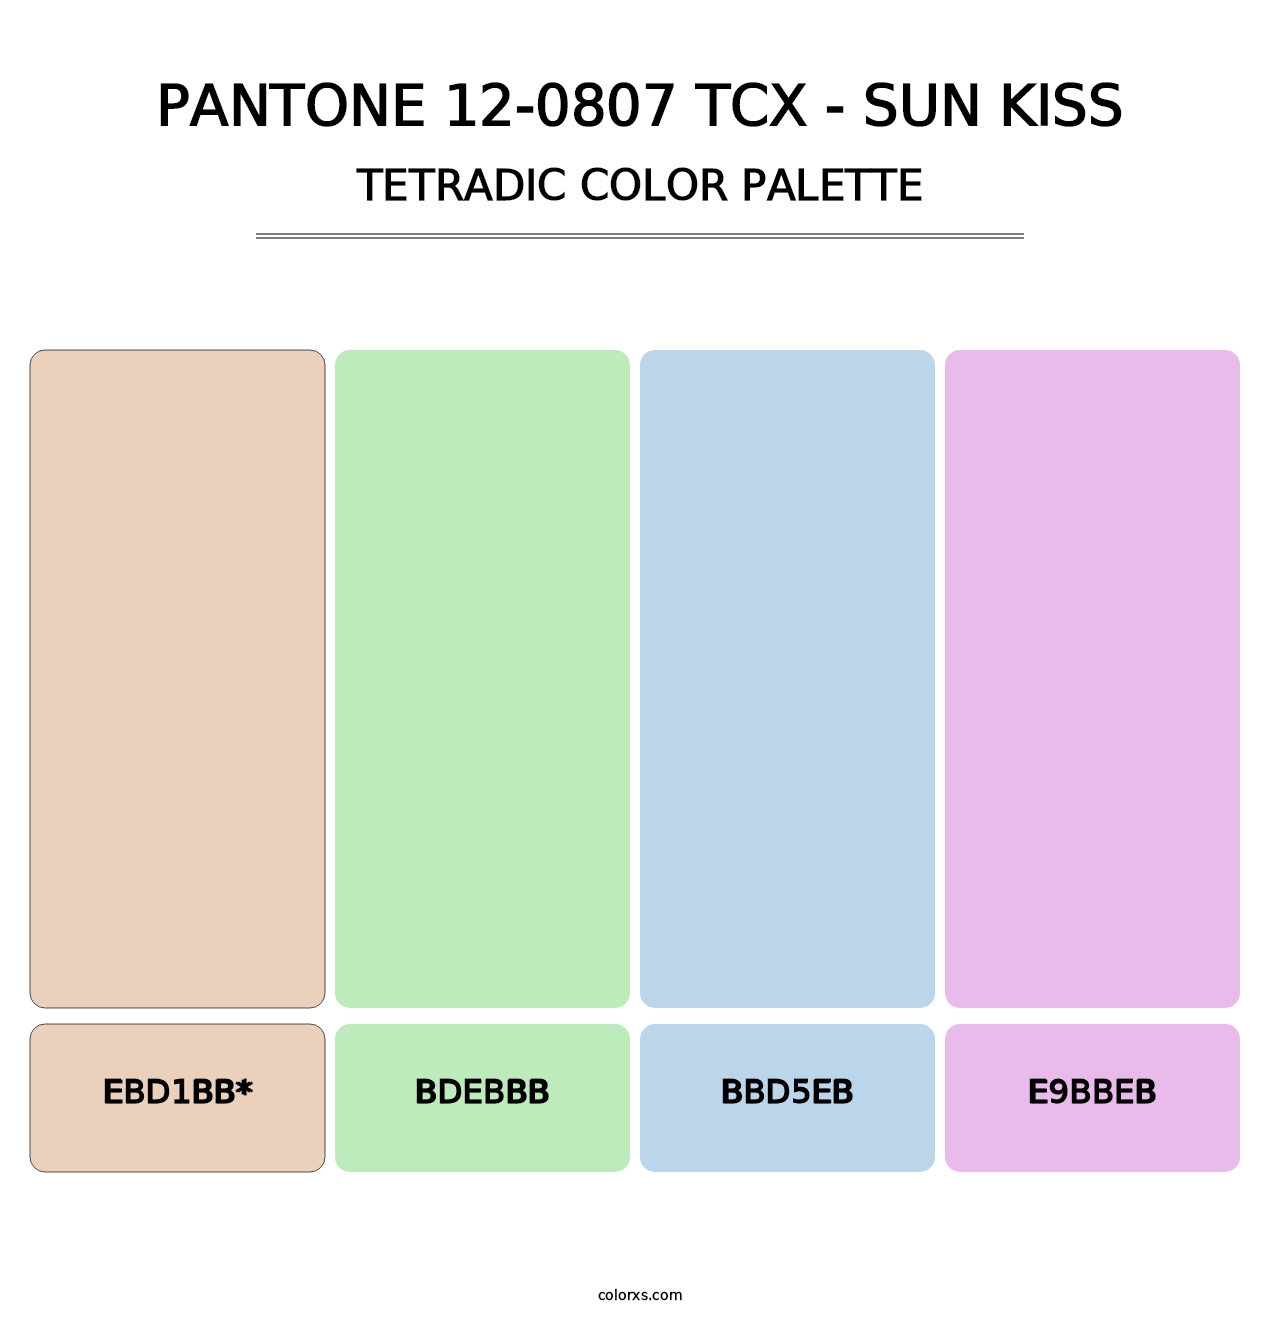 PANTONE 12-0807 TCX - Sun Kiss - Tetradic Color Palette